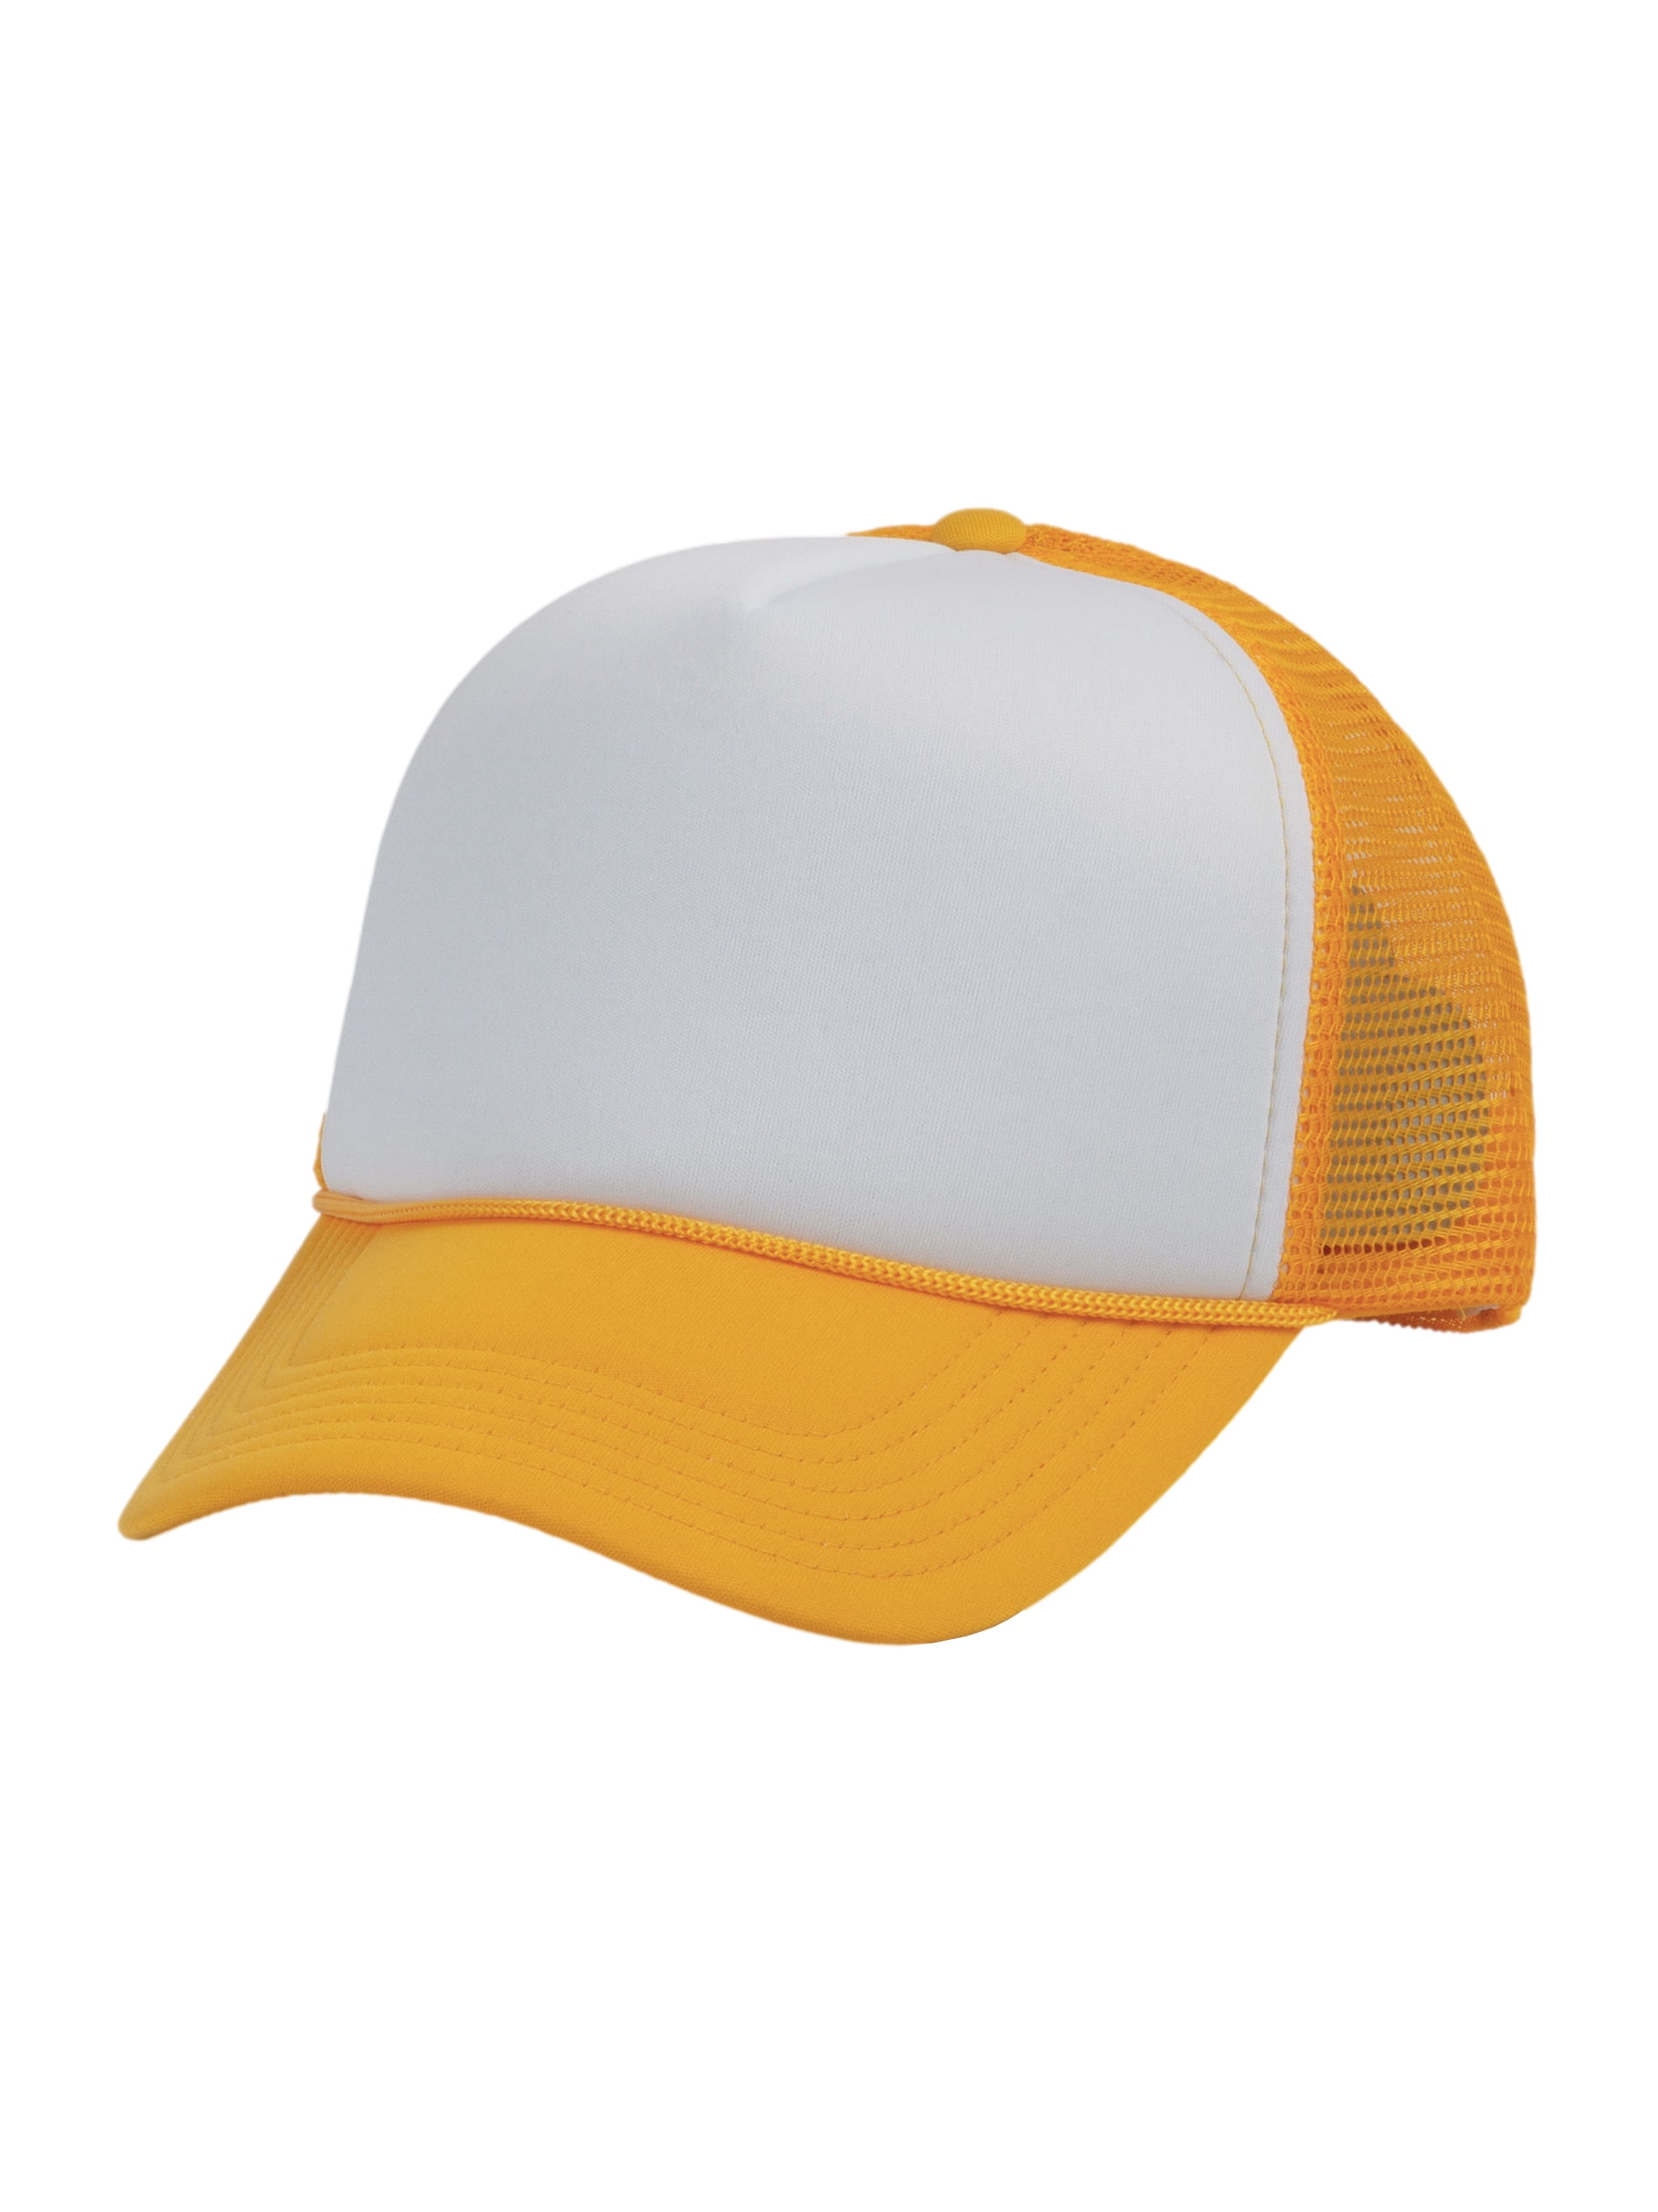 Wholesale FOAM Mesh Trucker 5 Panel Curved Snapback Blank Hats - Gold